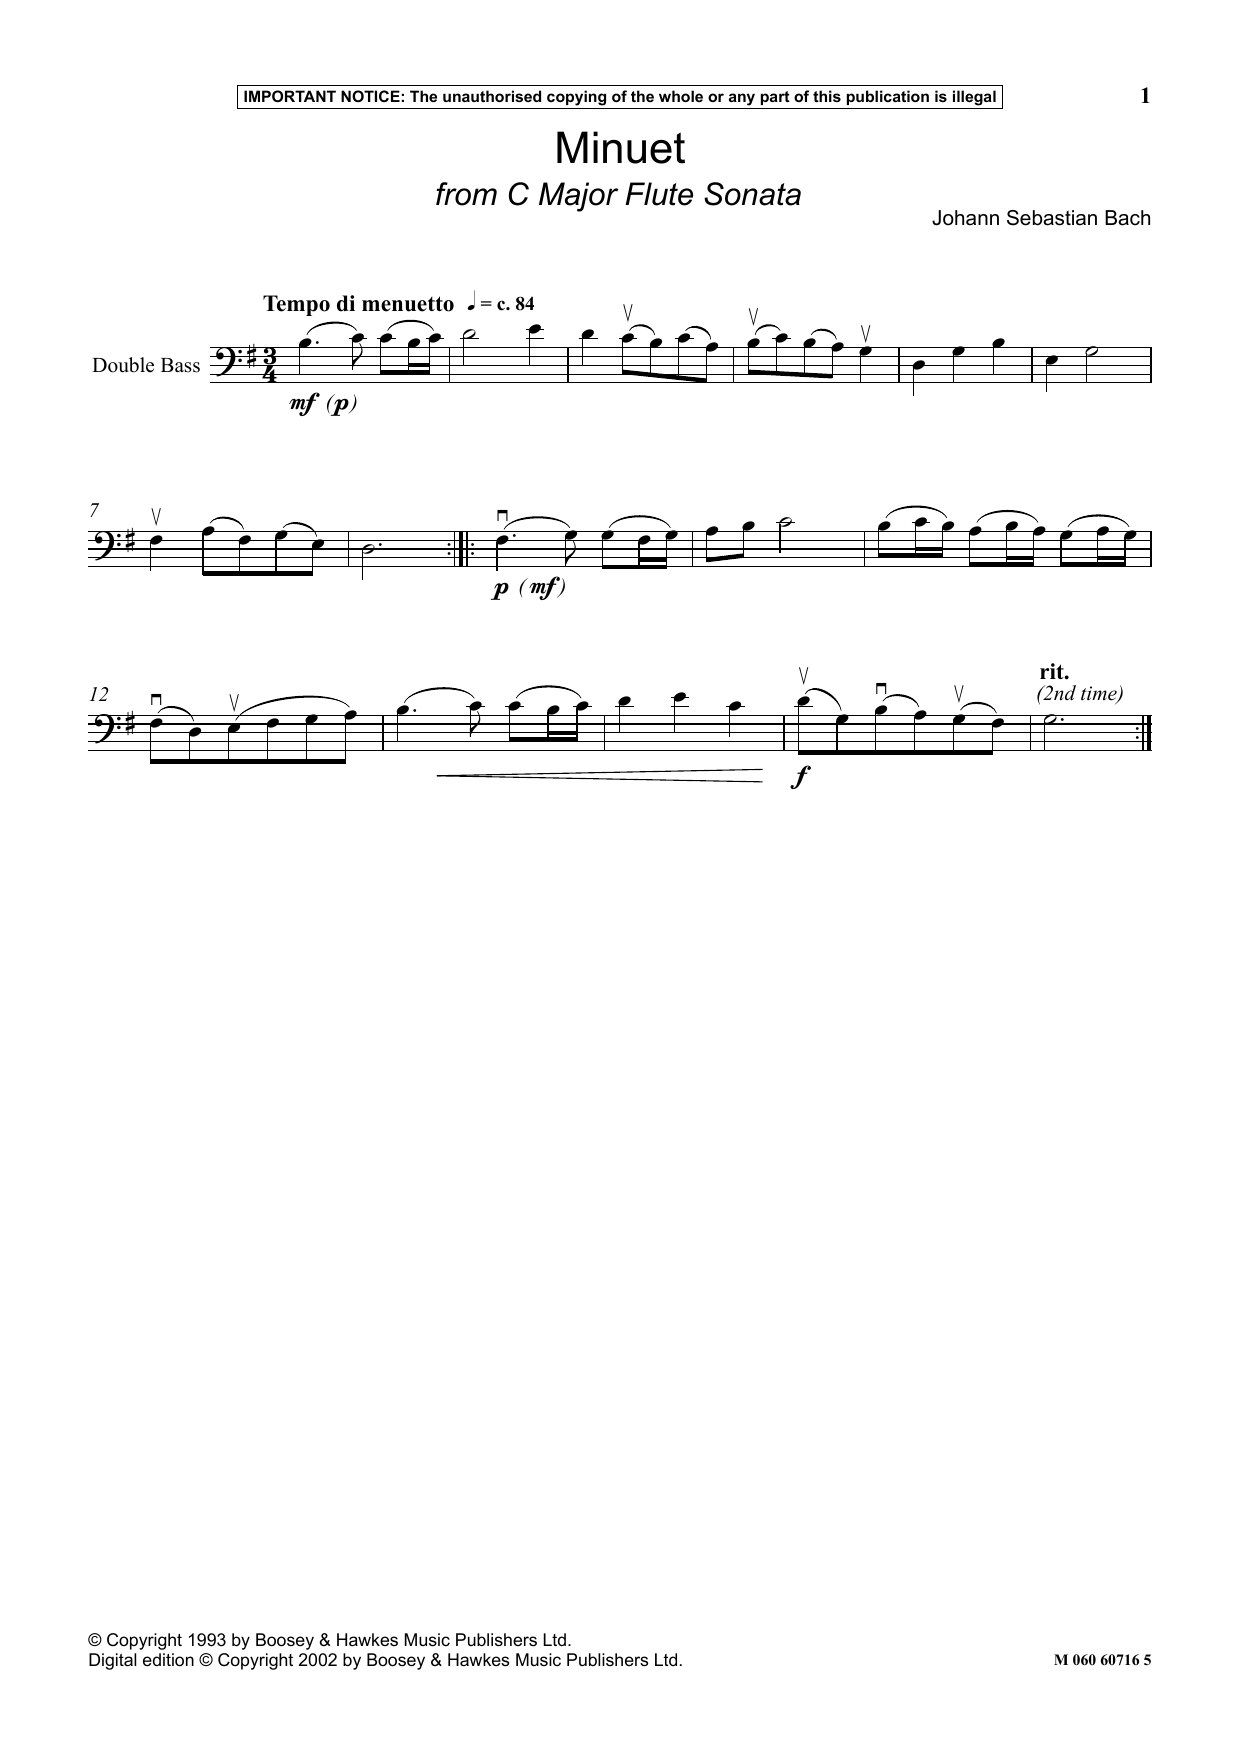 Download Johann Sebastian Bach Minuet (from C Major Flute Sonata) Sheet Music